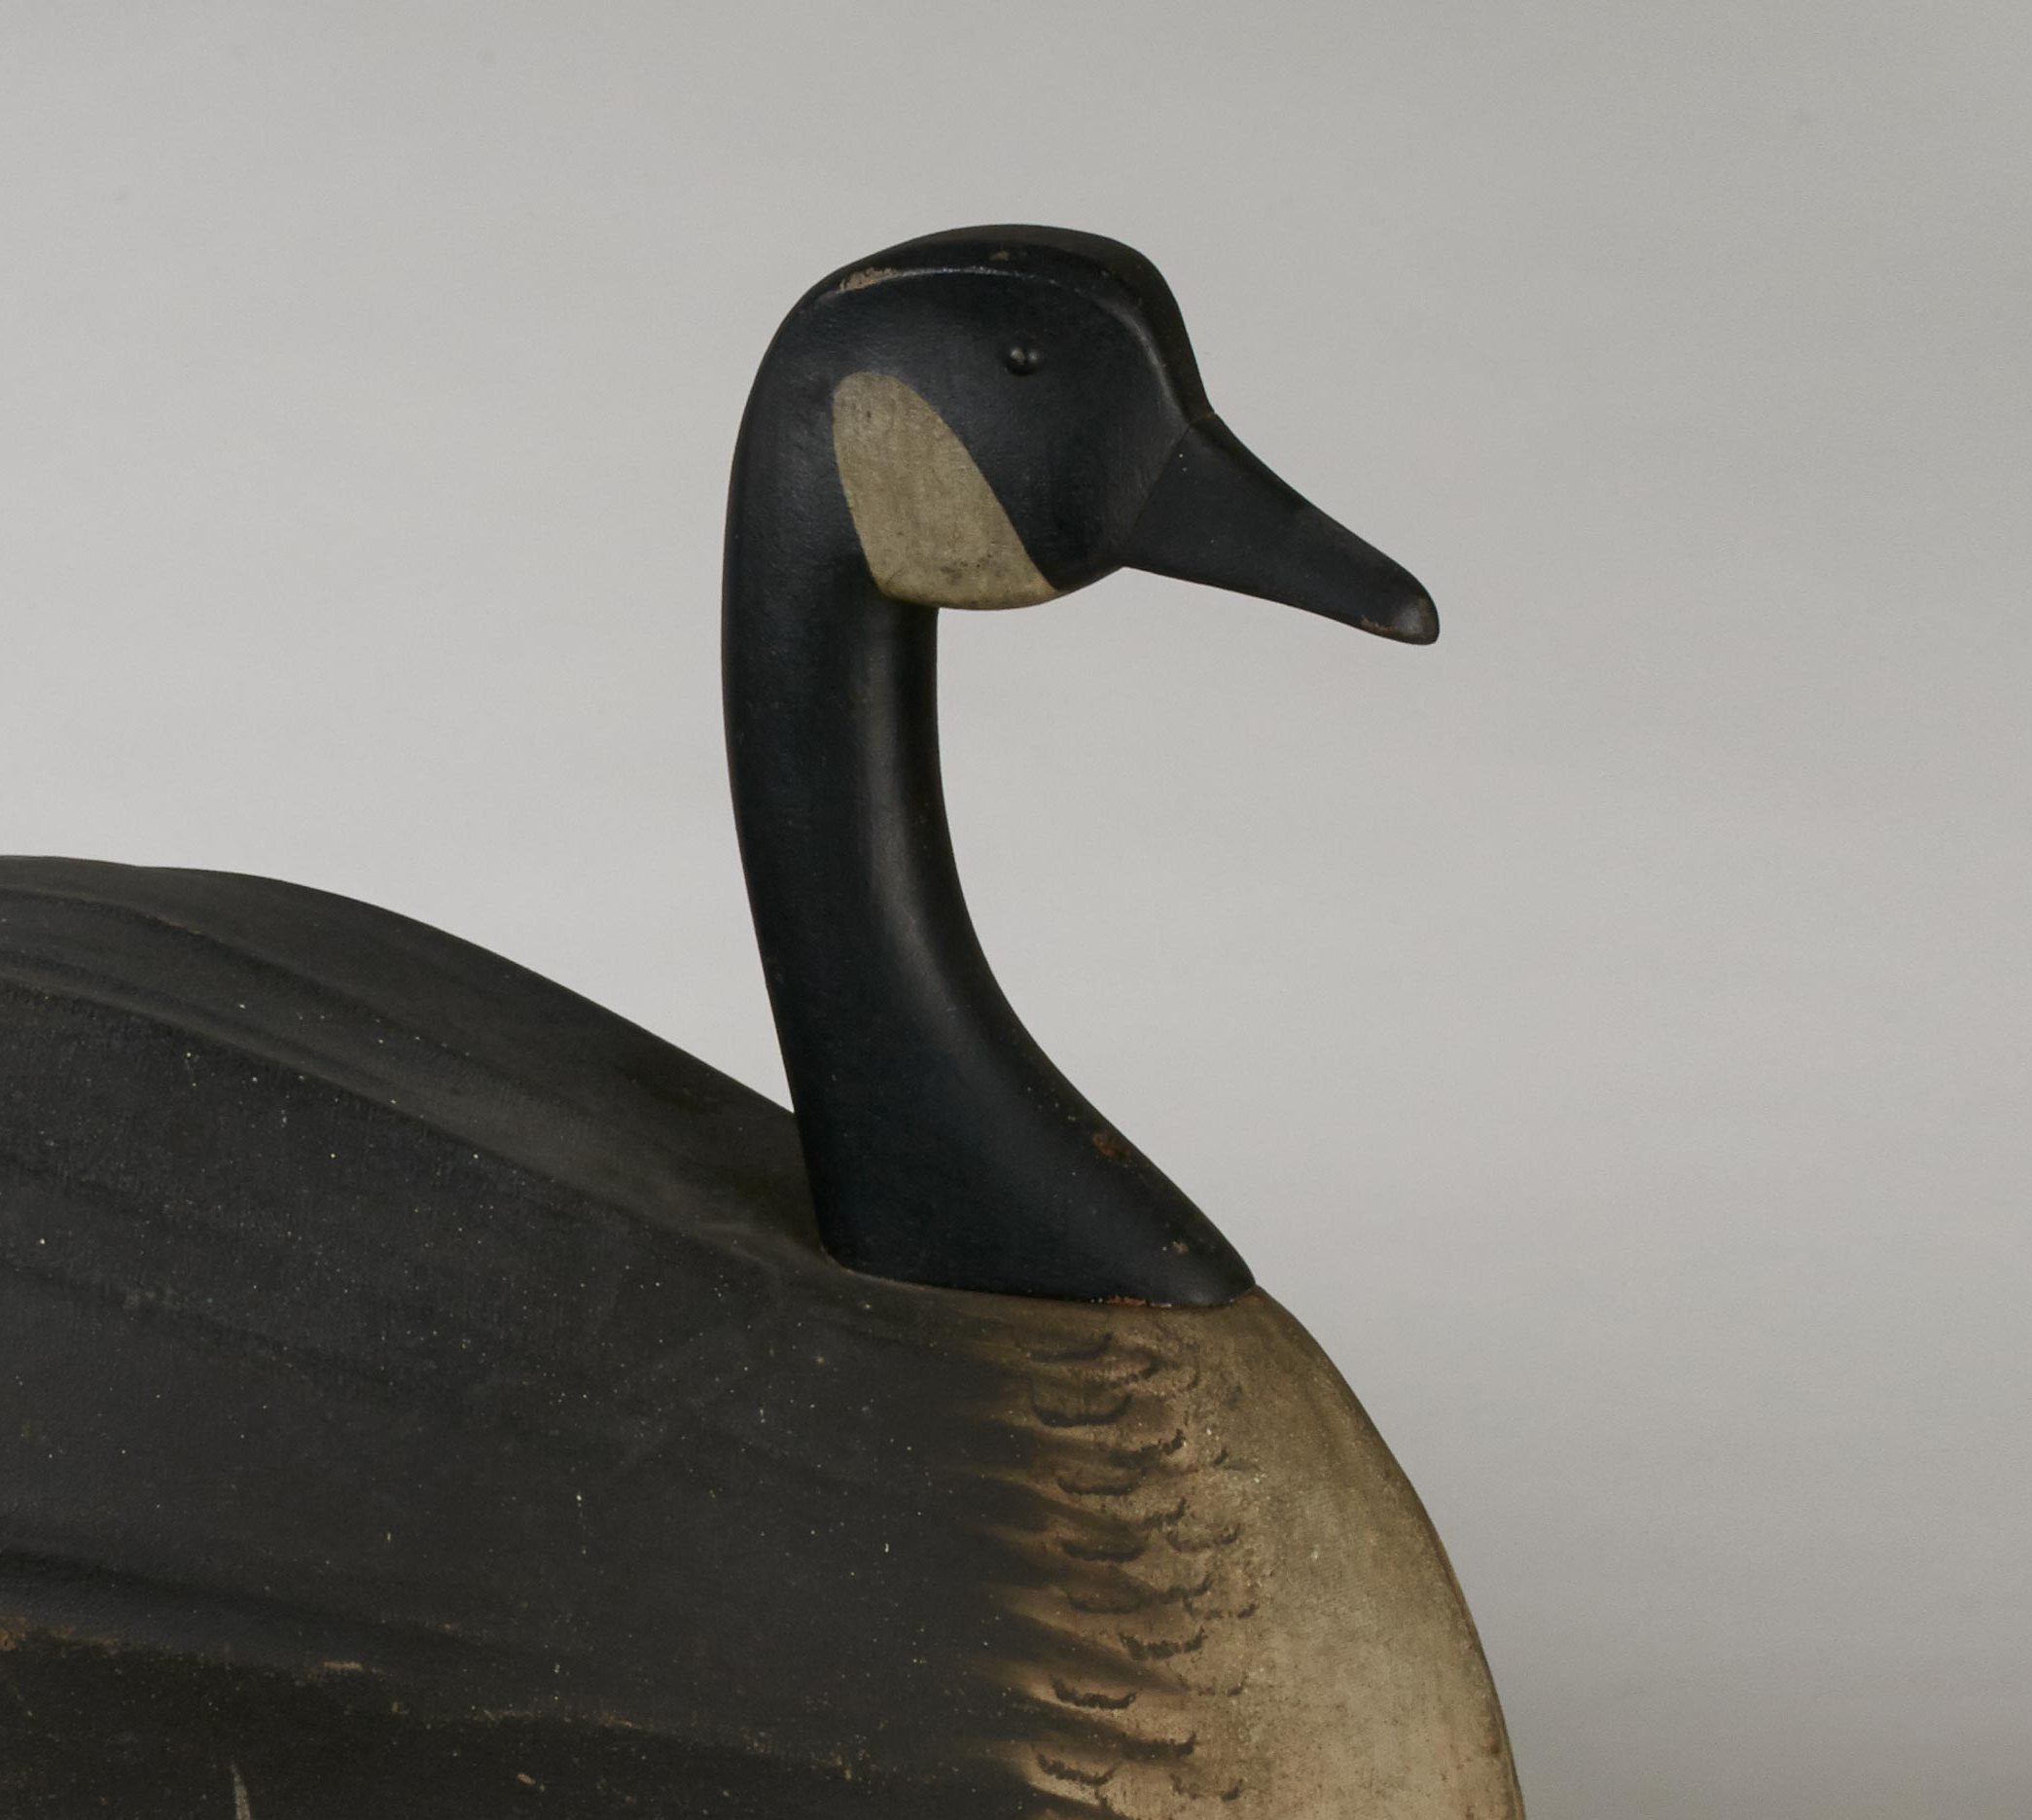 antique canada goose decoy rel=